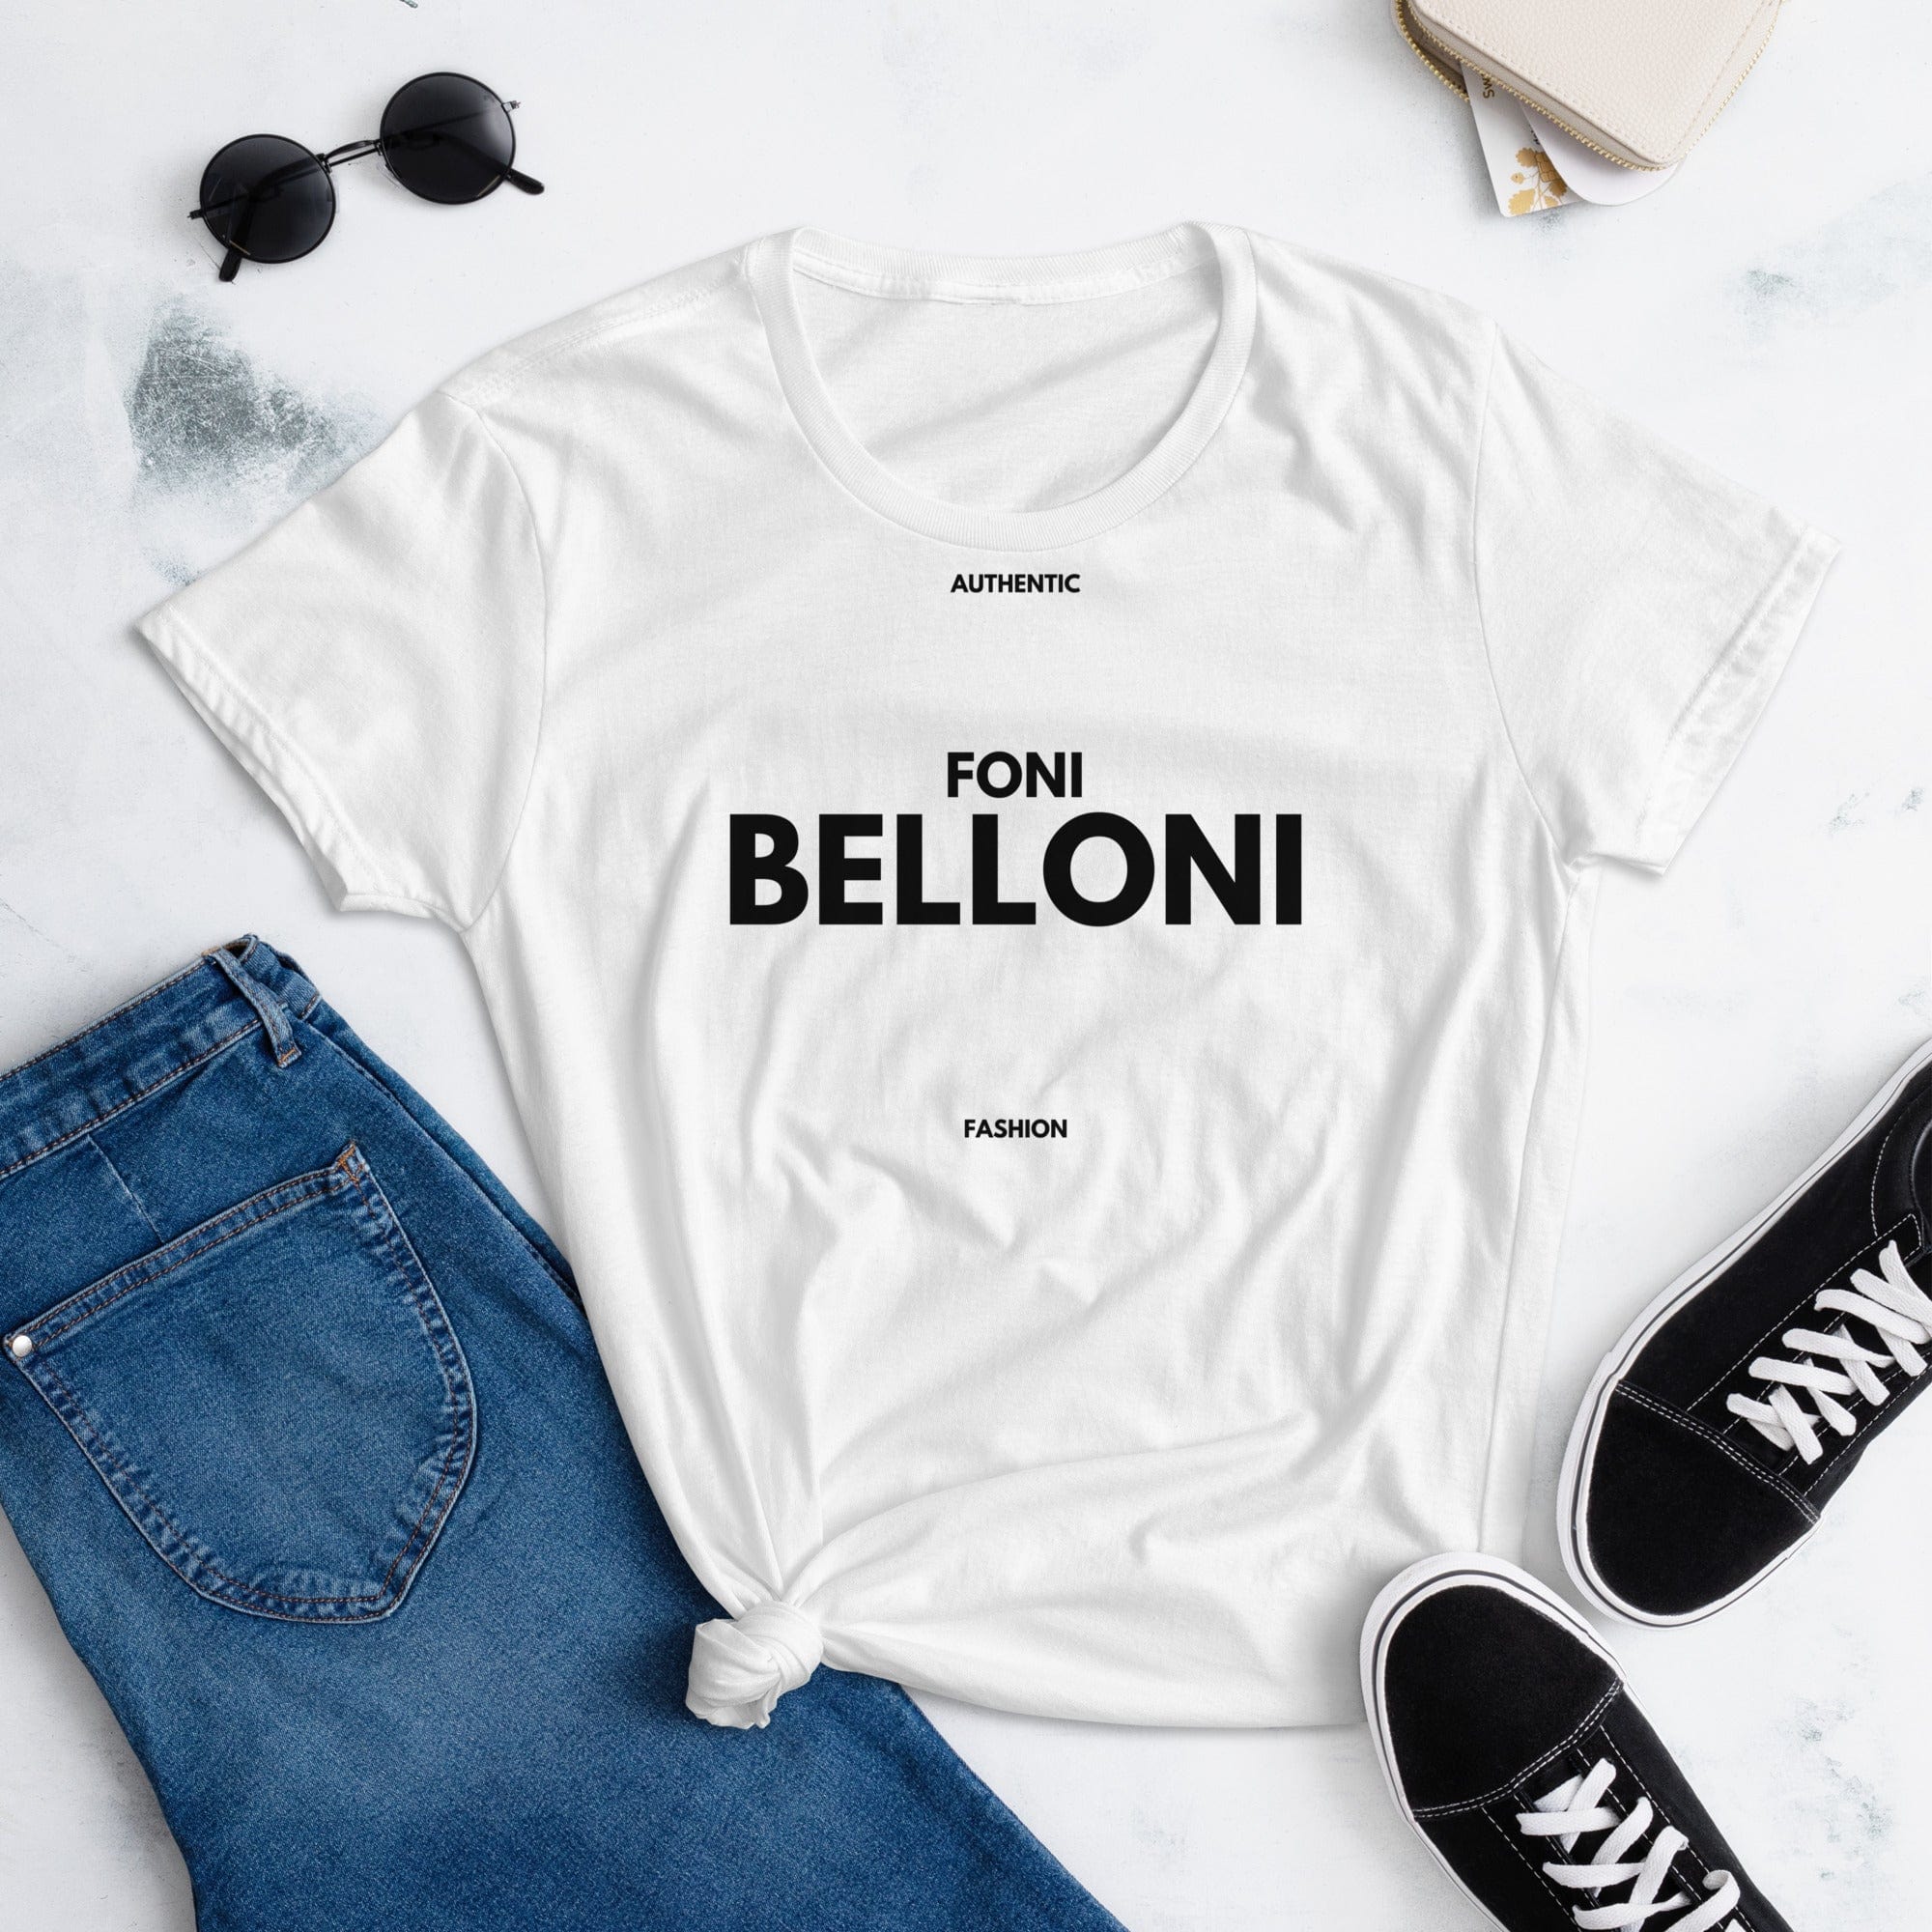 Foni Belloni Authentic Fashion Women's T-shirt White / S Women's Shirts Jolly & Goode